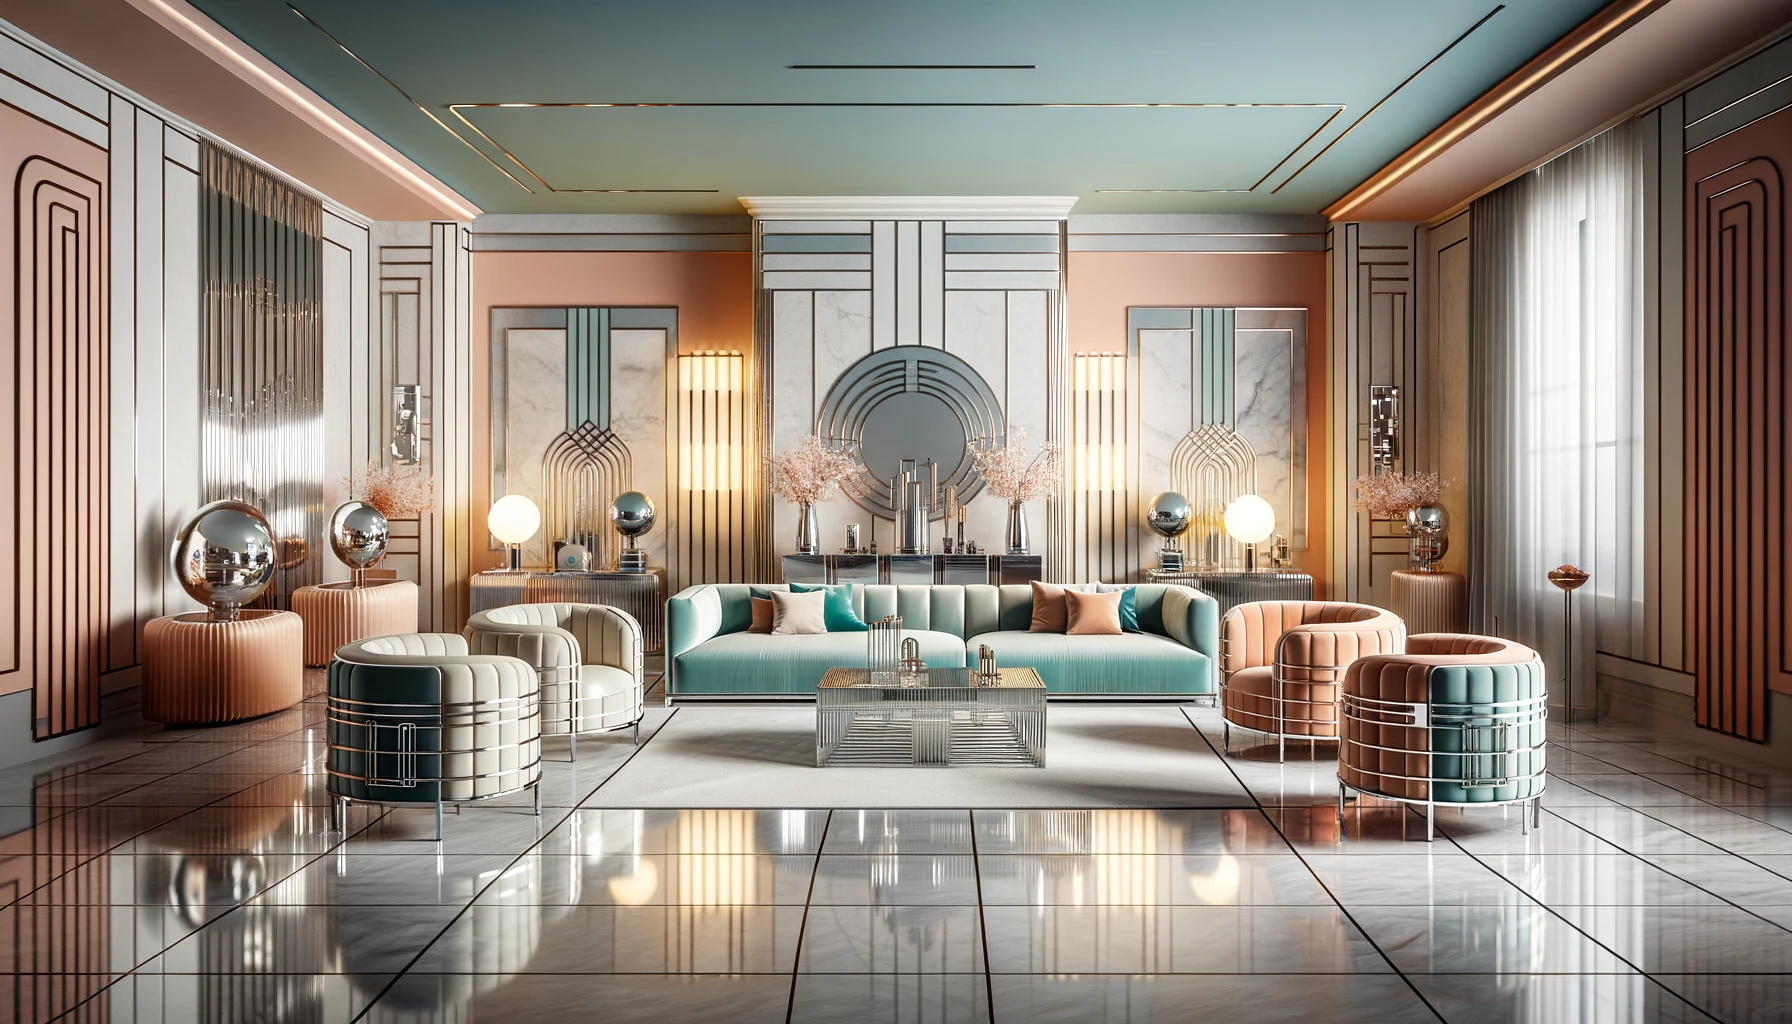 Luxurious art deco style lounge room interior design